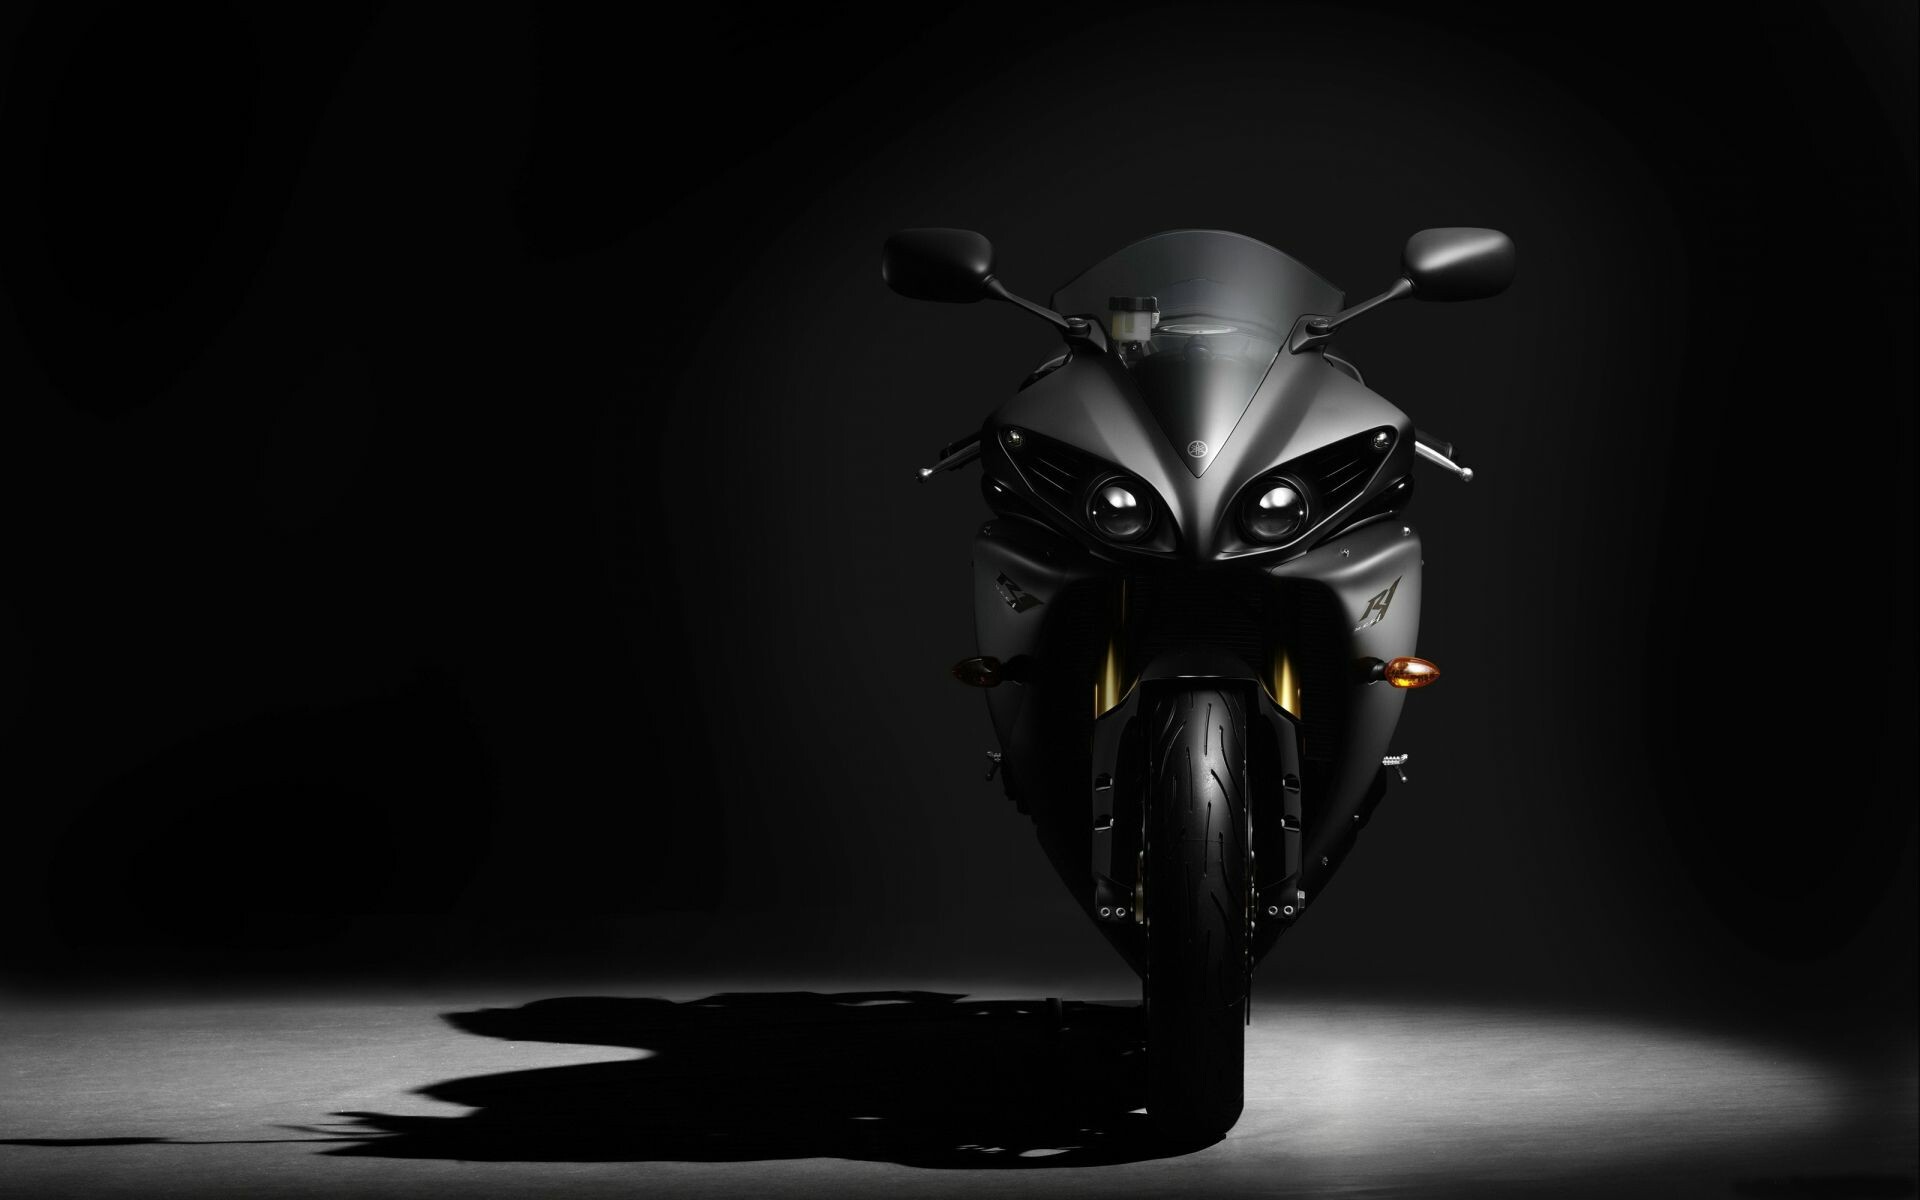 Bike: The Yamaha YZF-R1, A 1,000 cc (61 cu in)-class sports motorcycle. 1920x1200 HD Wallpaper.